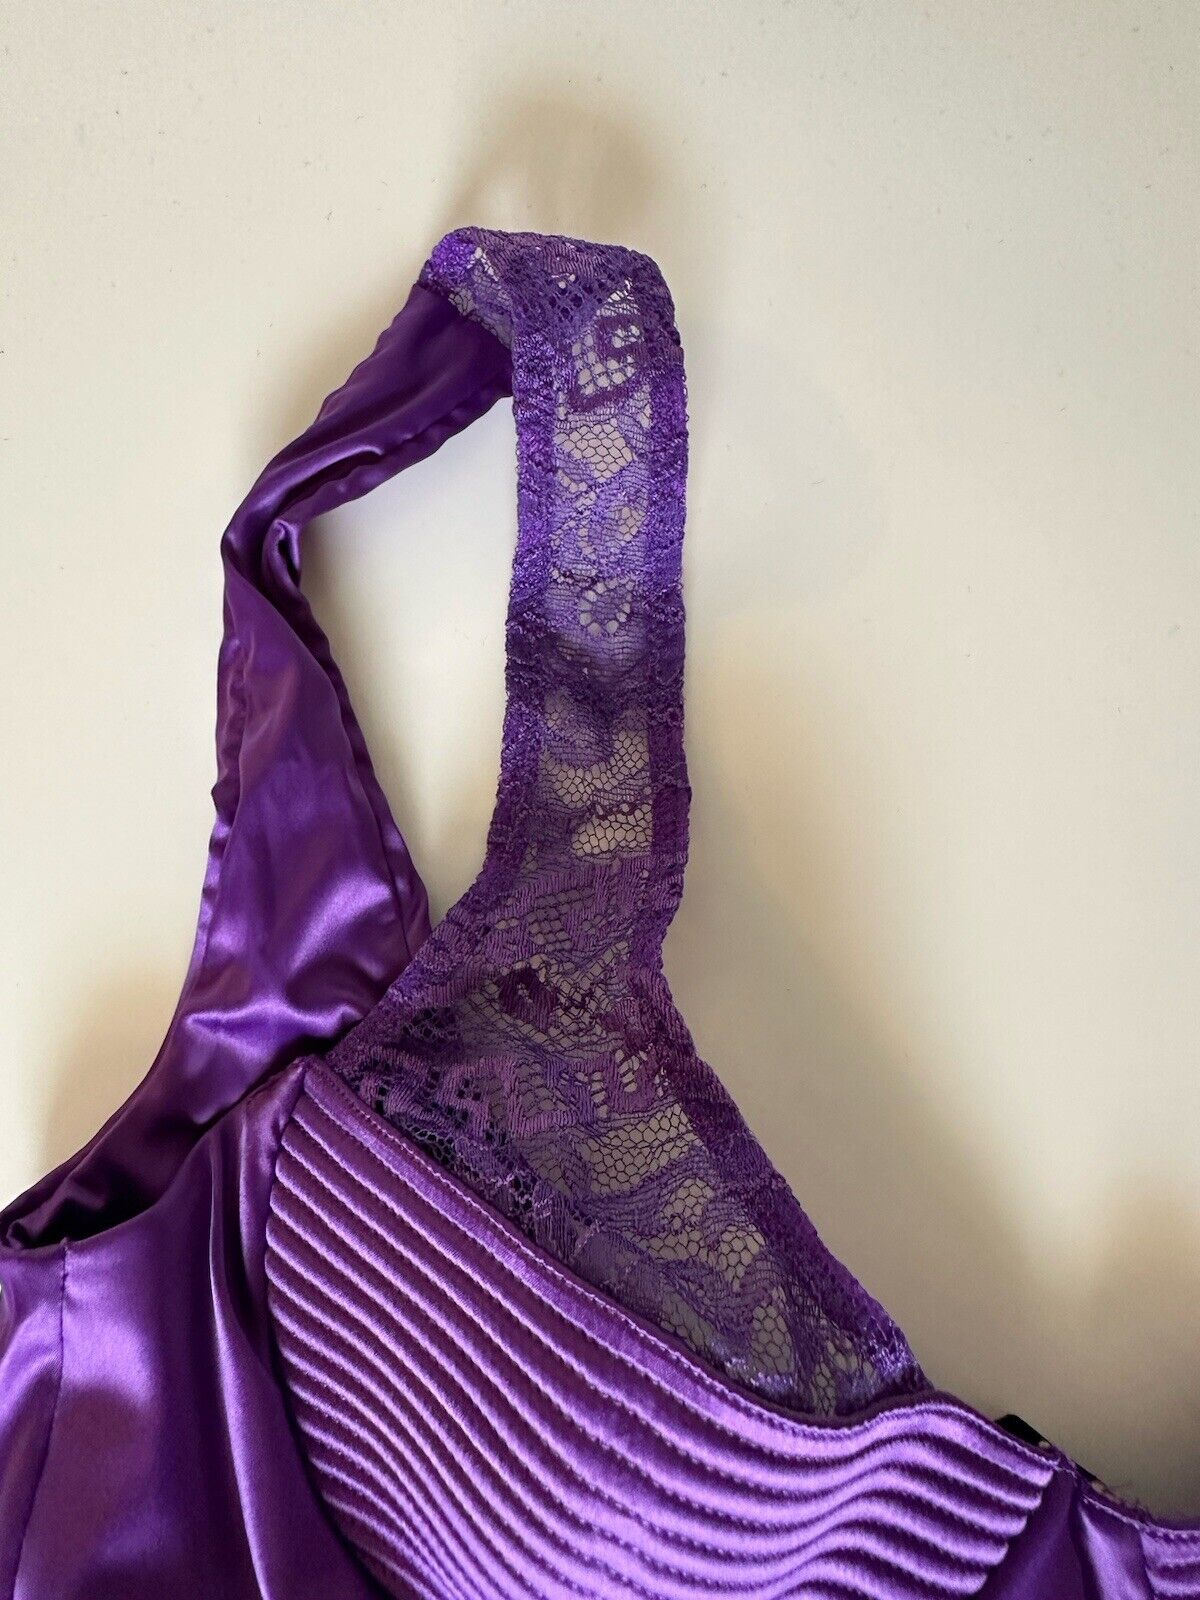 Versace Women’s Greek Key Purple Runway Bralette 1B Italy 1010115 NWT $550